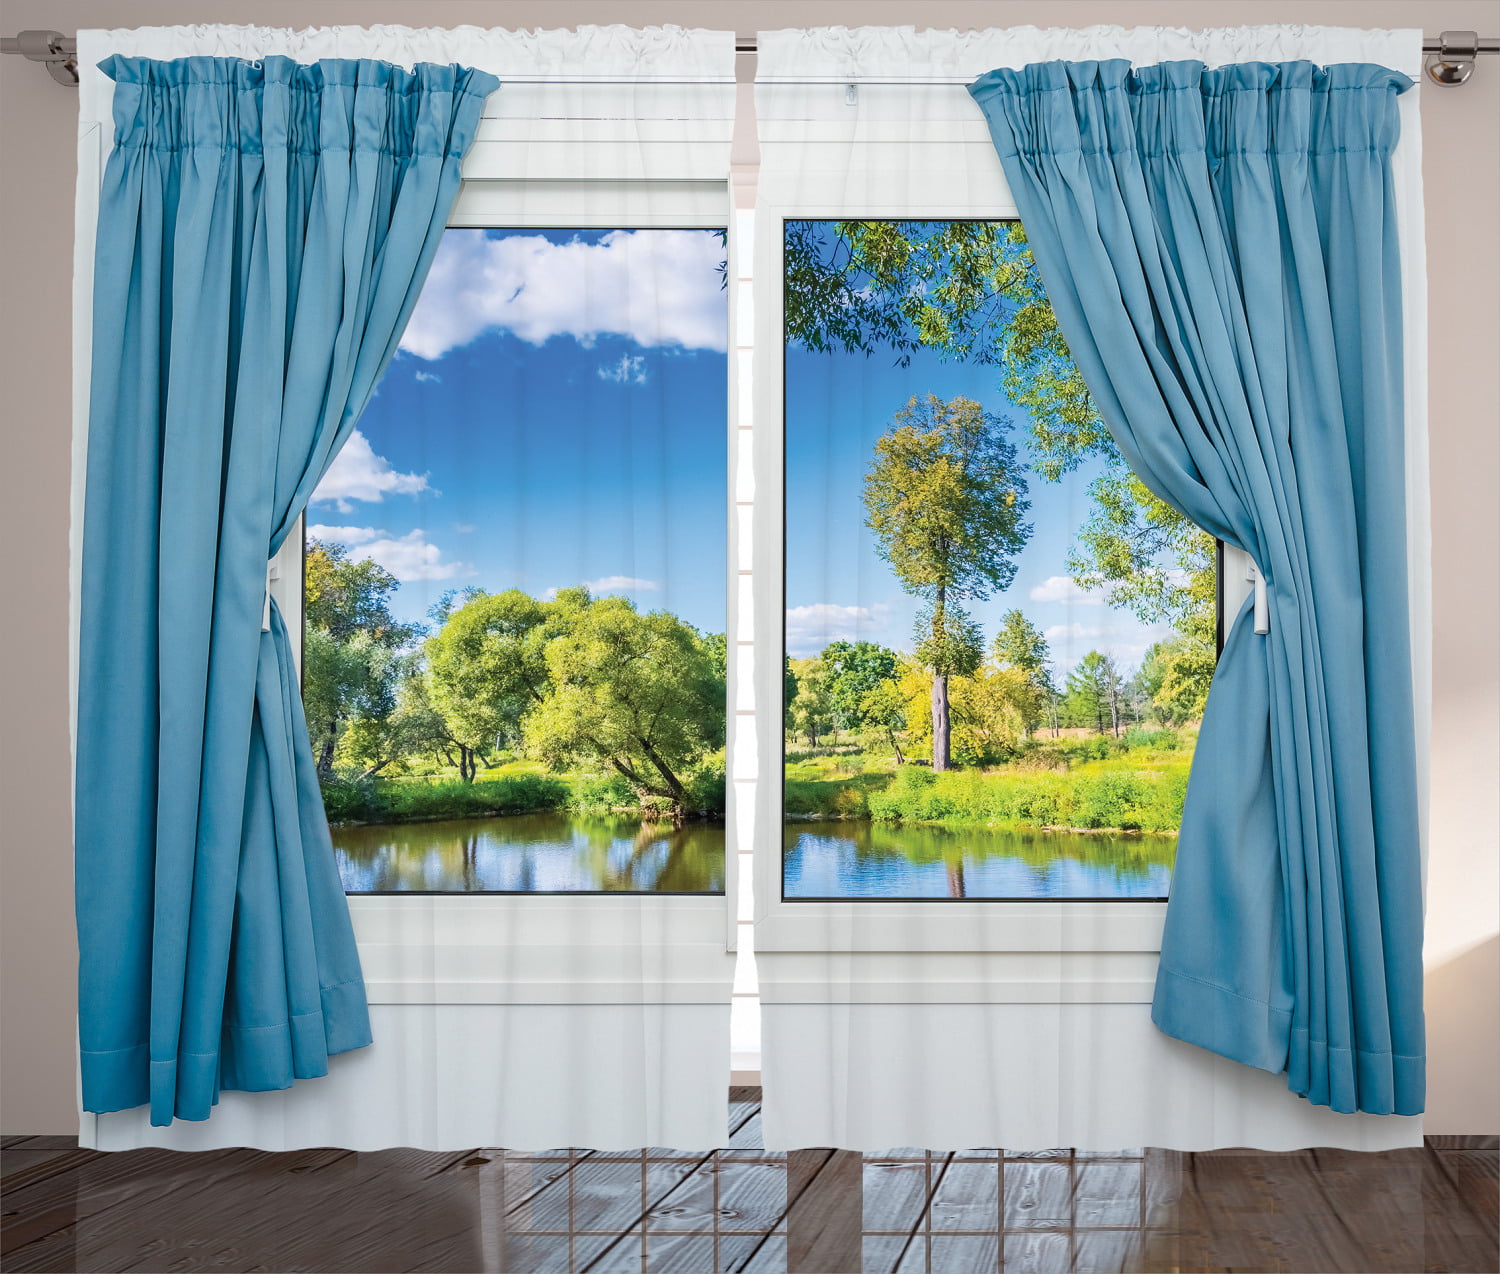 Scenery Curtains Life Tree Yard Field Window Drapes 2 Panel Set 108x90 Inches 